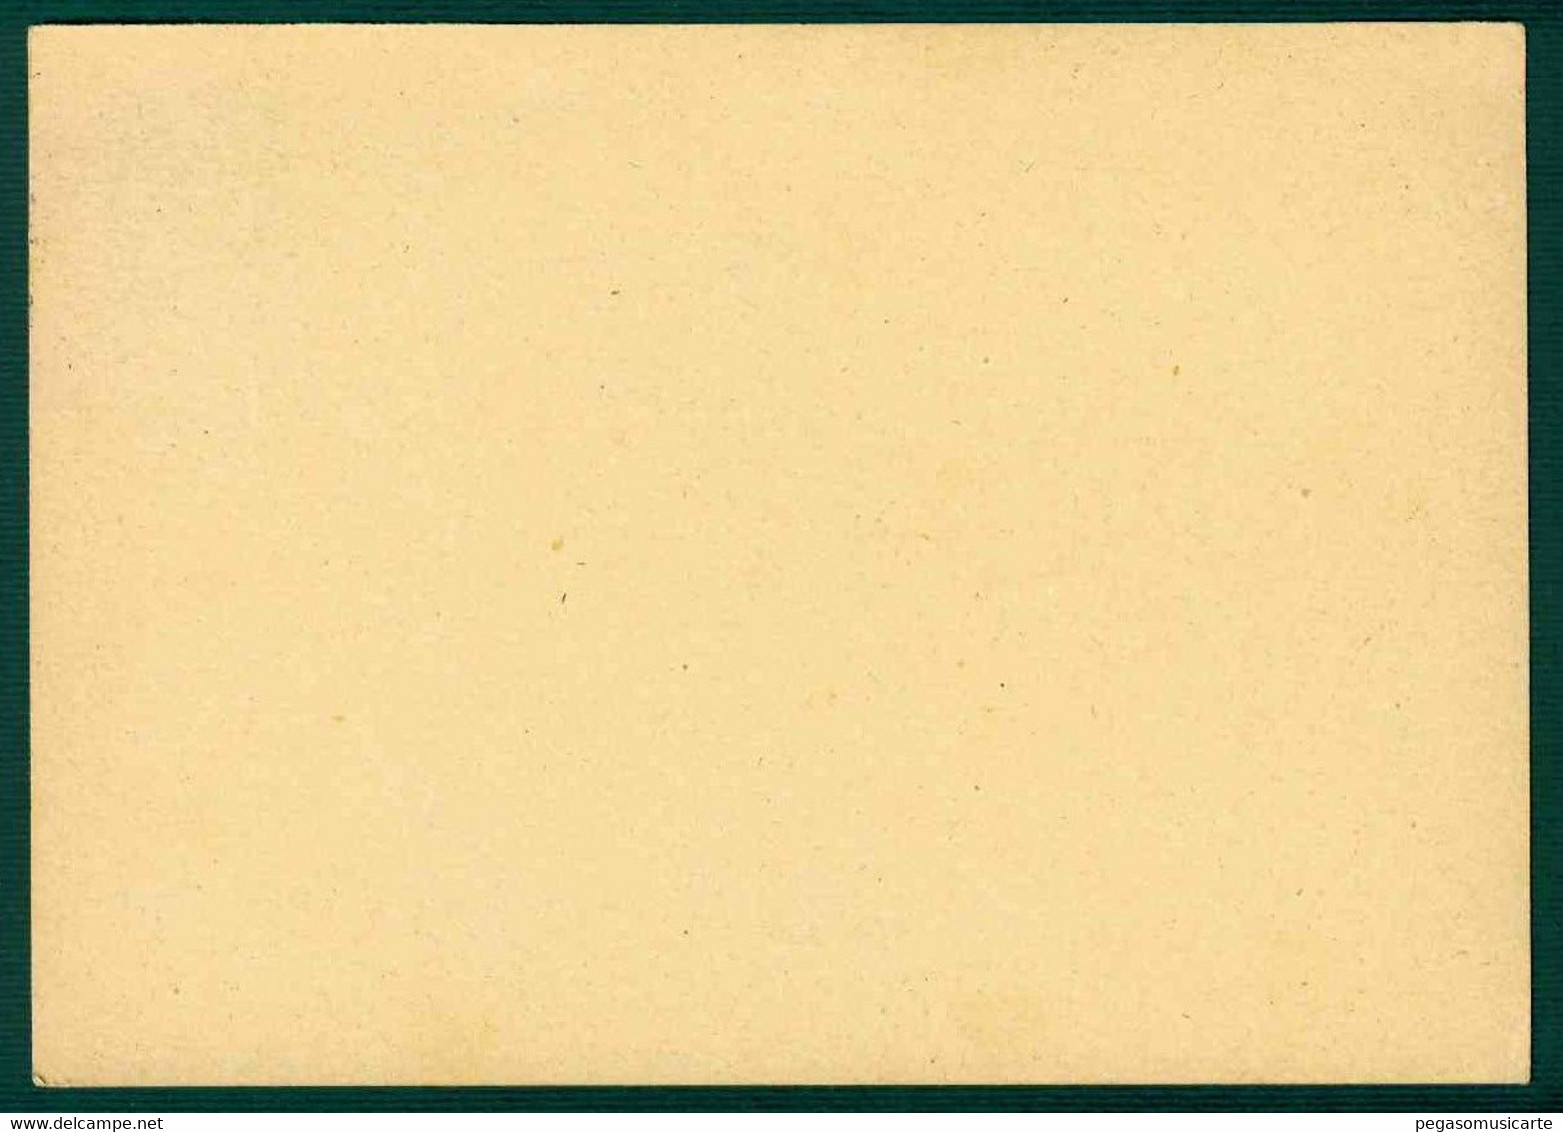 CLM063 - CARTOLINA POSTALE - INTERO POSTALE CENTESIMI 15  STORIA POSTALE 1938 - Stamped Stationery